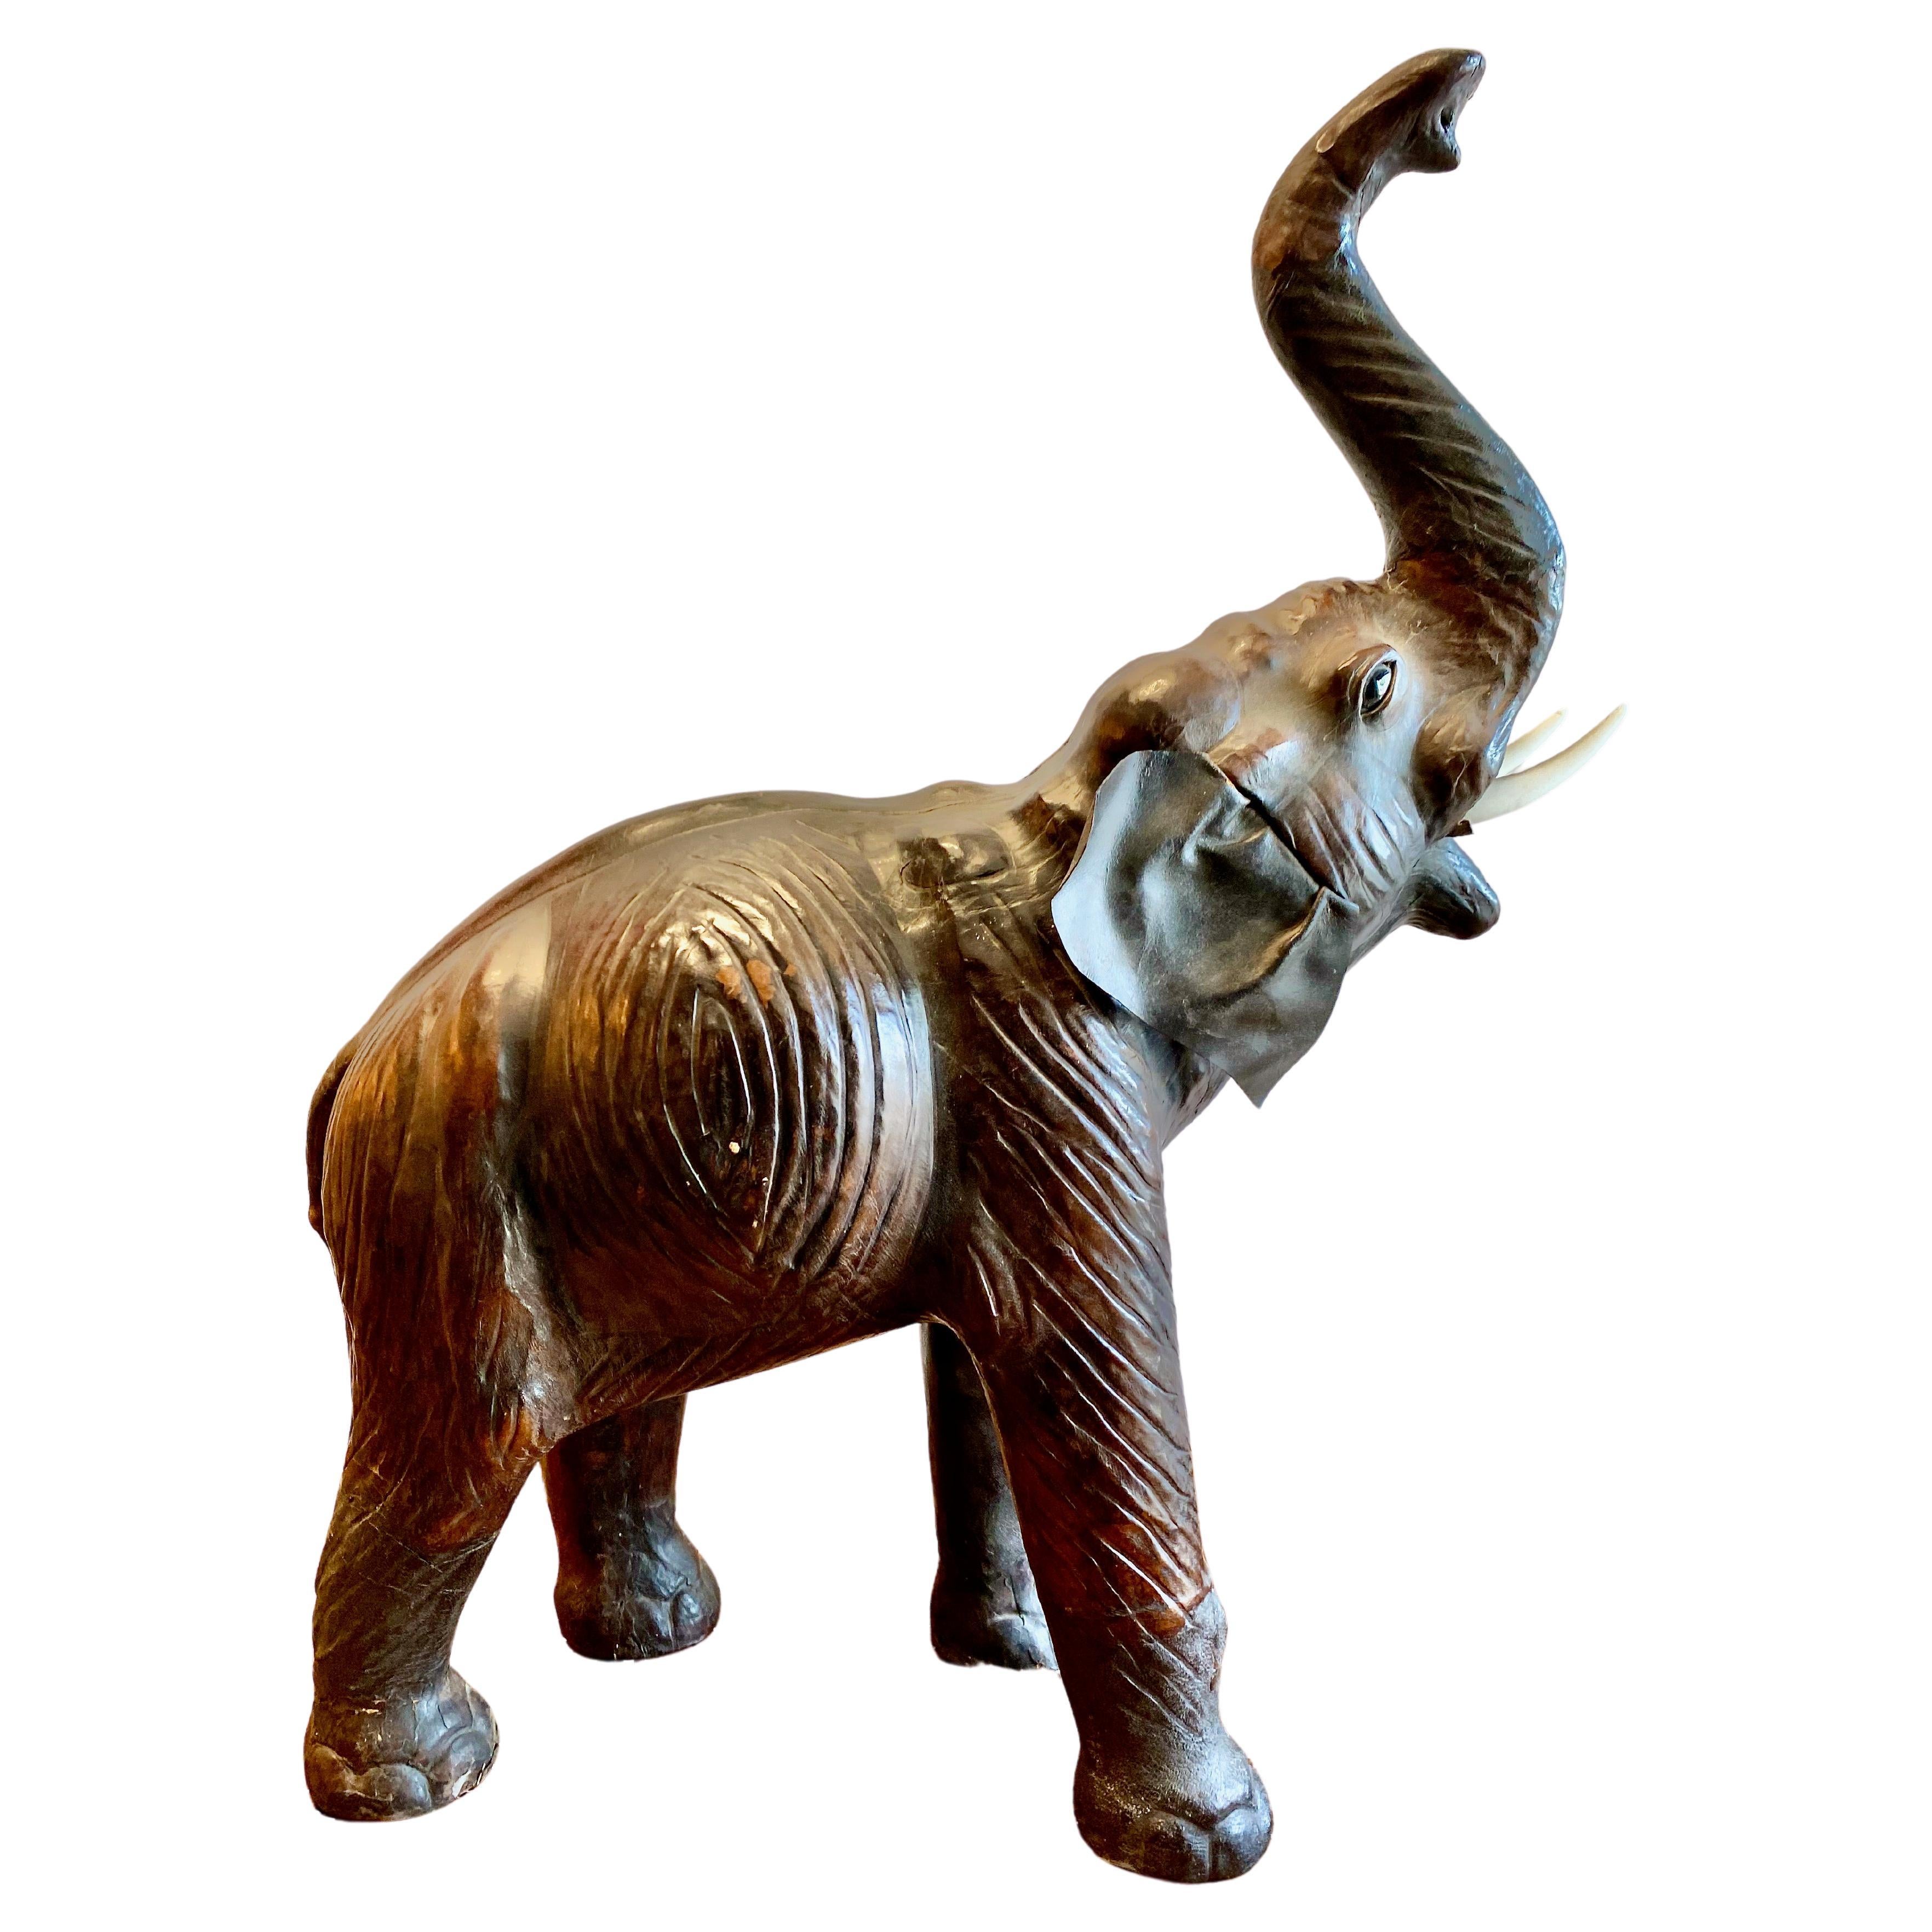 Leather Clad Elephant Sculpture For Sale